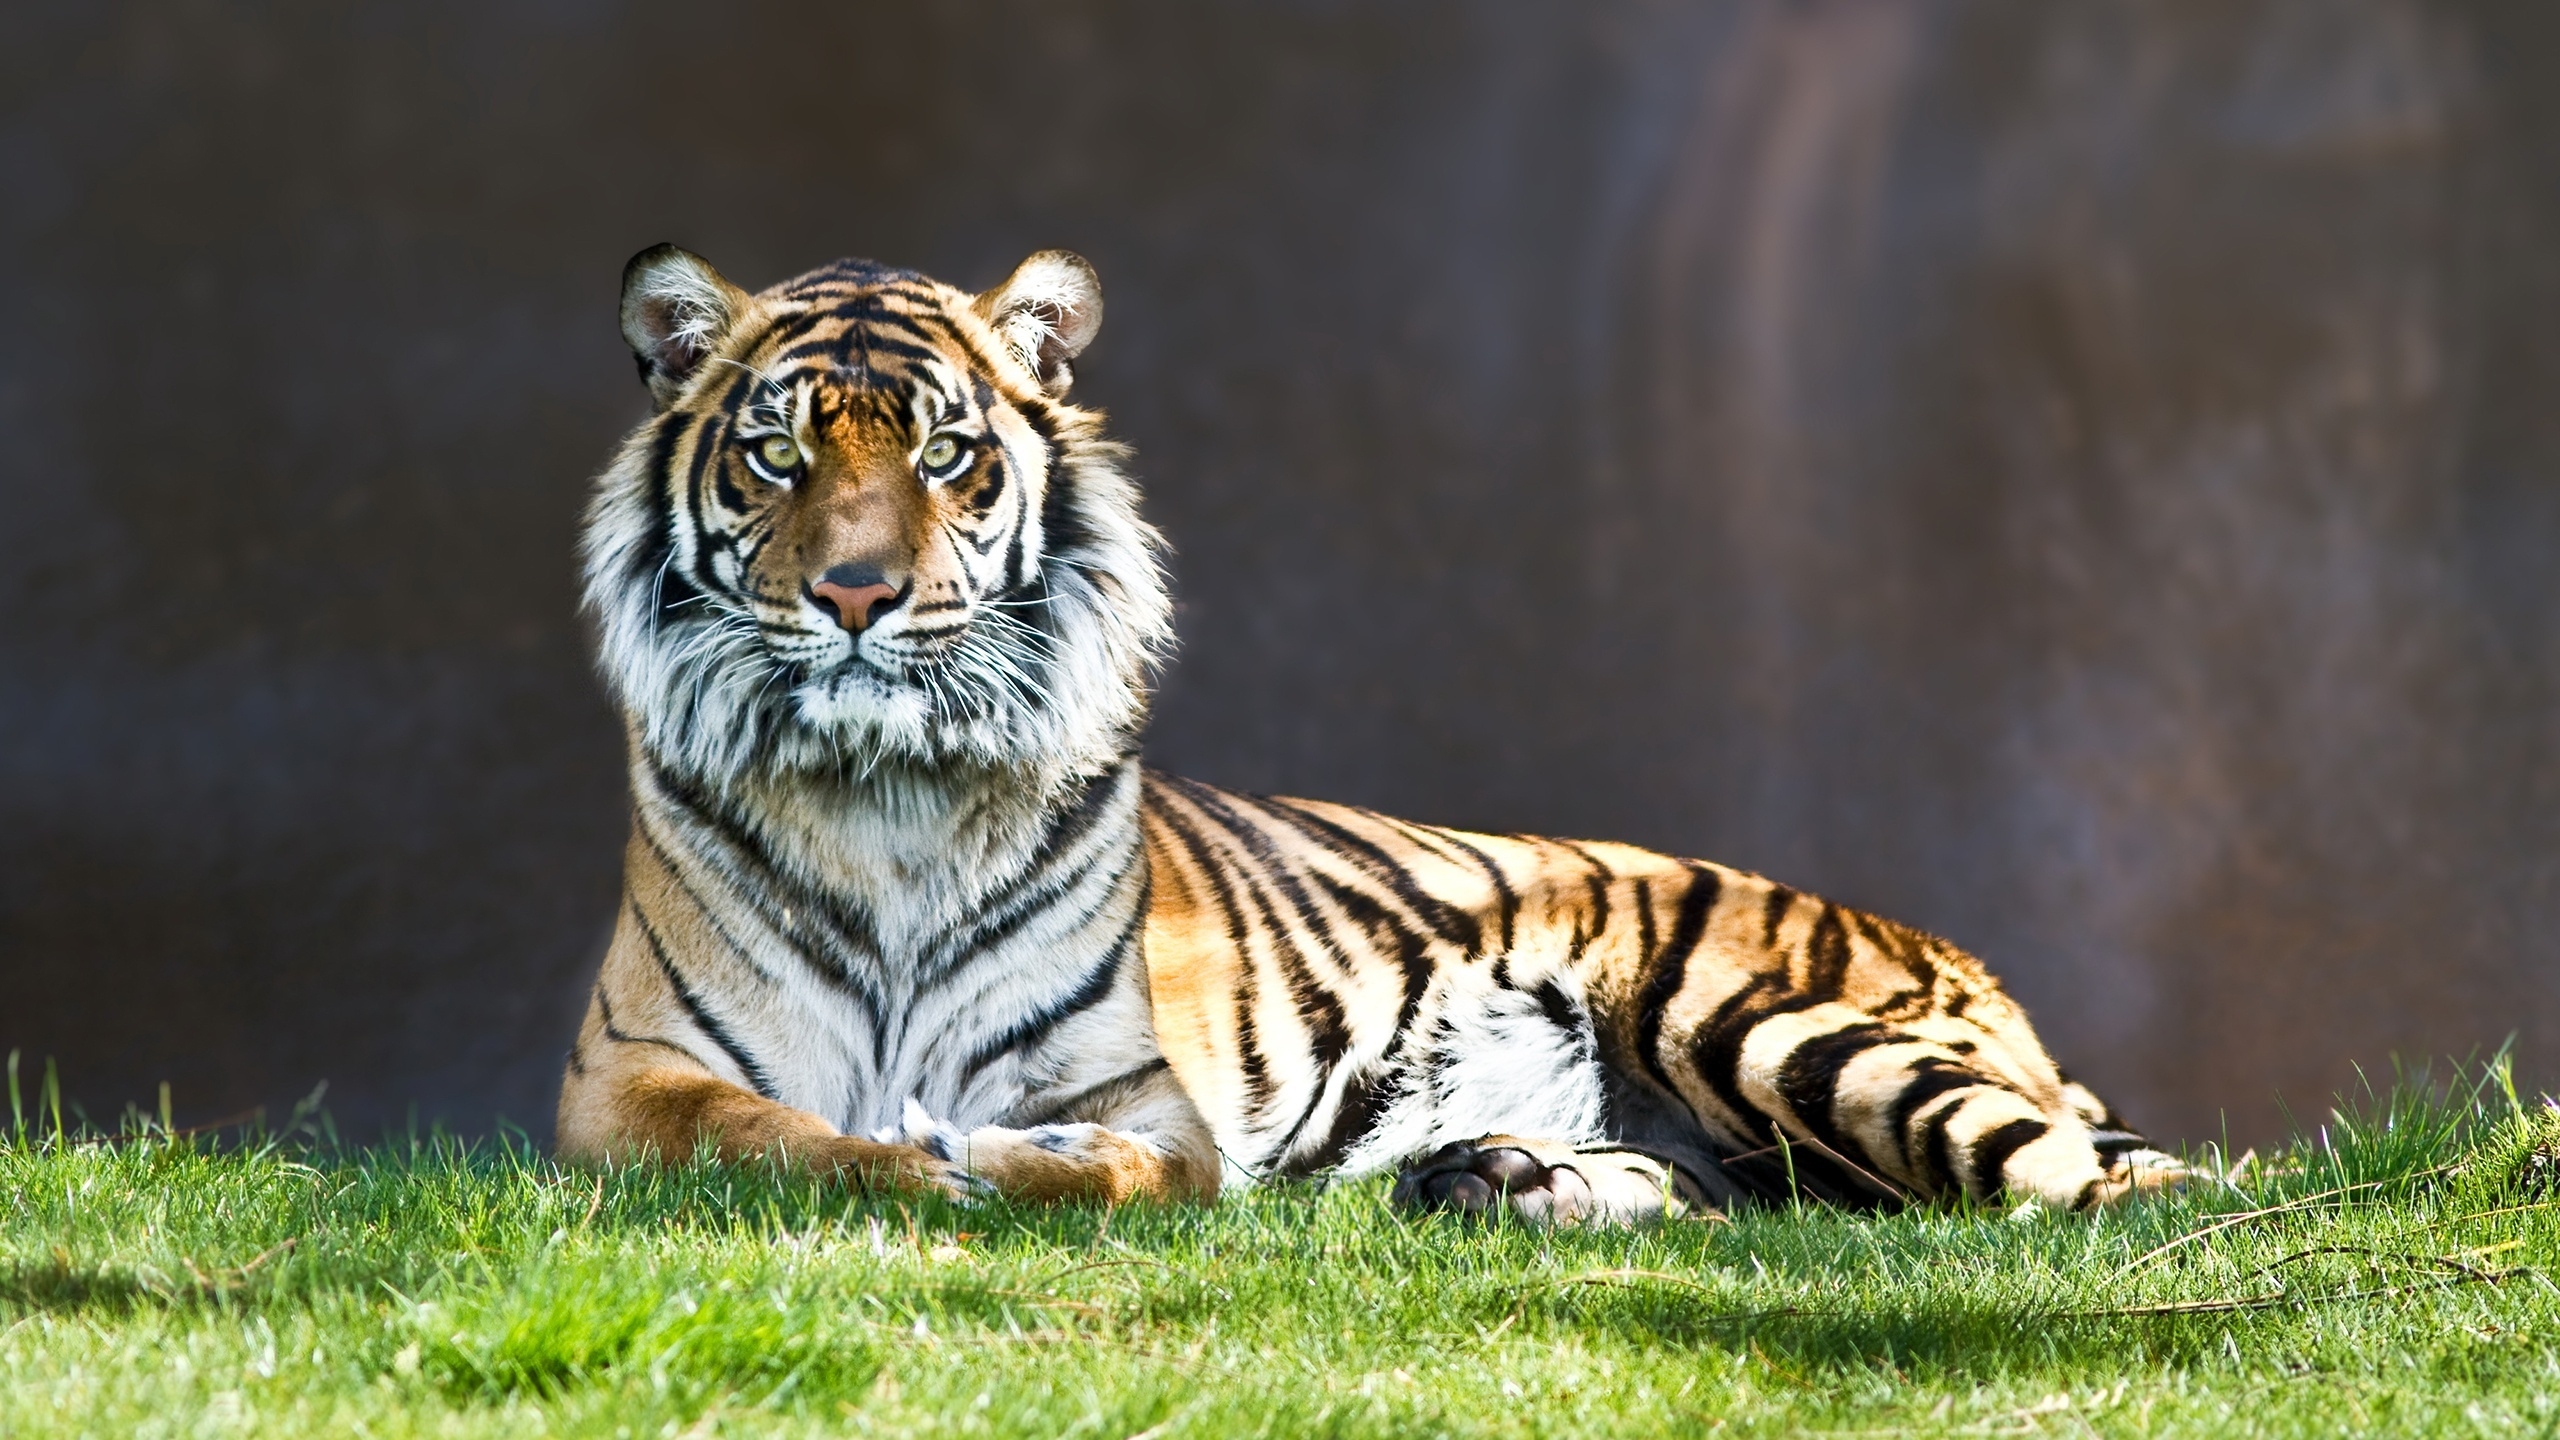 Tiger Thinking for 2560x1440 HDTV resolution